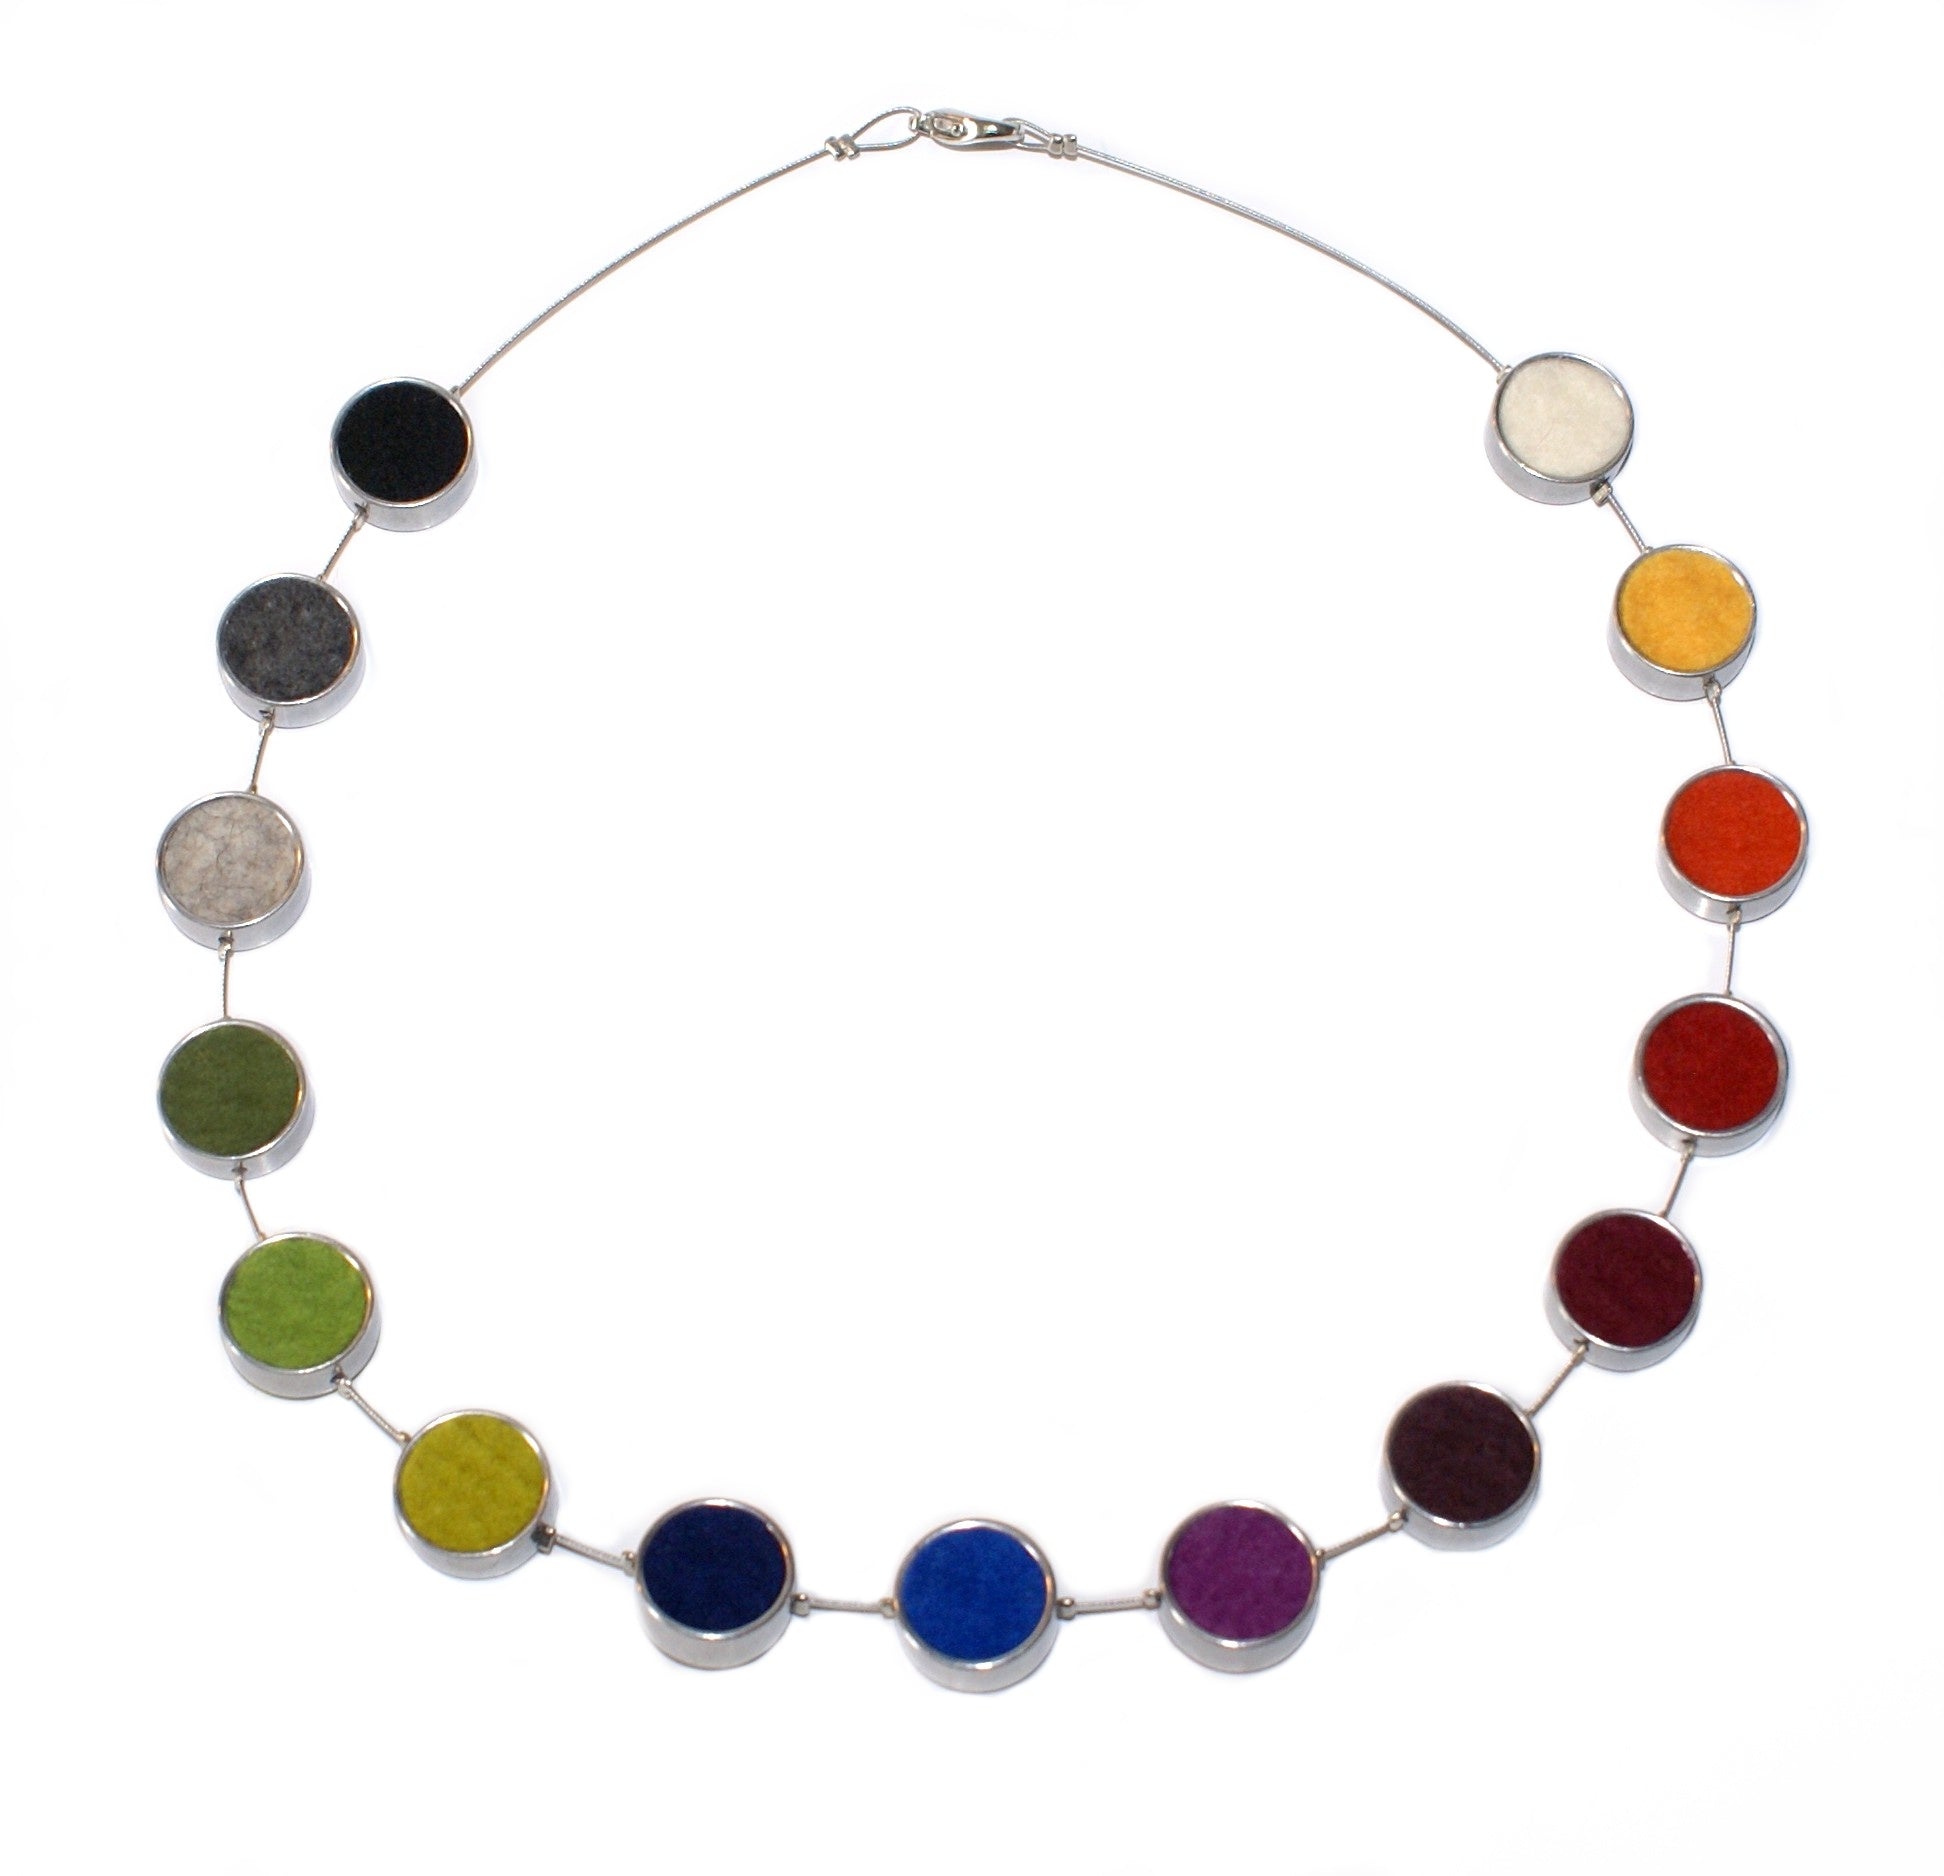 Multi-coloured Felt Circles Necklace - The Nancy Smillie Shop - Art, Jewellery & Designer Gifts Glasgow